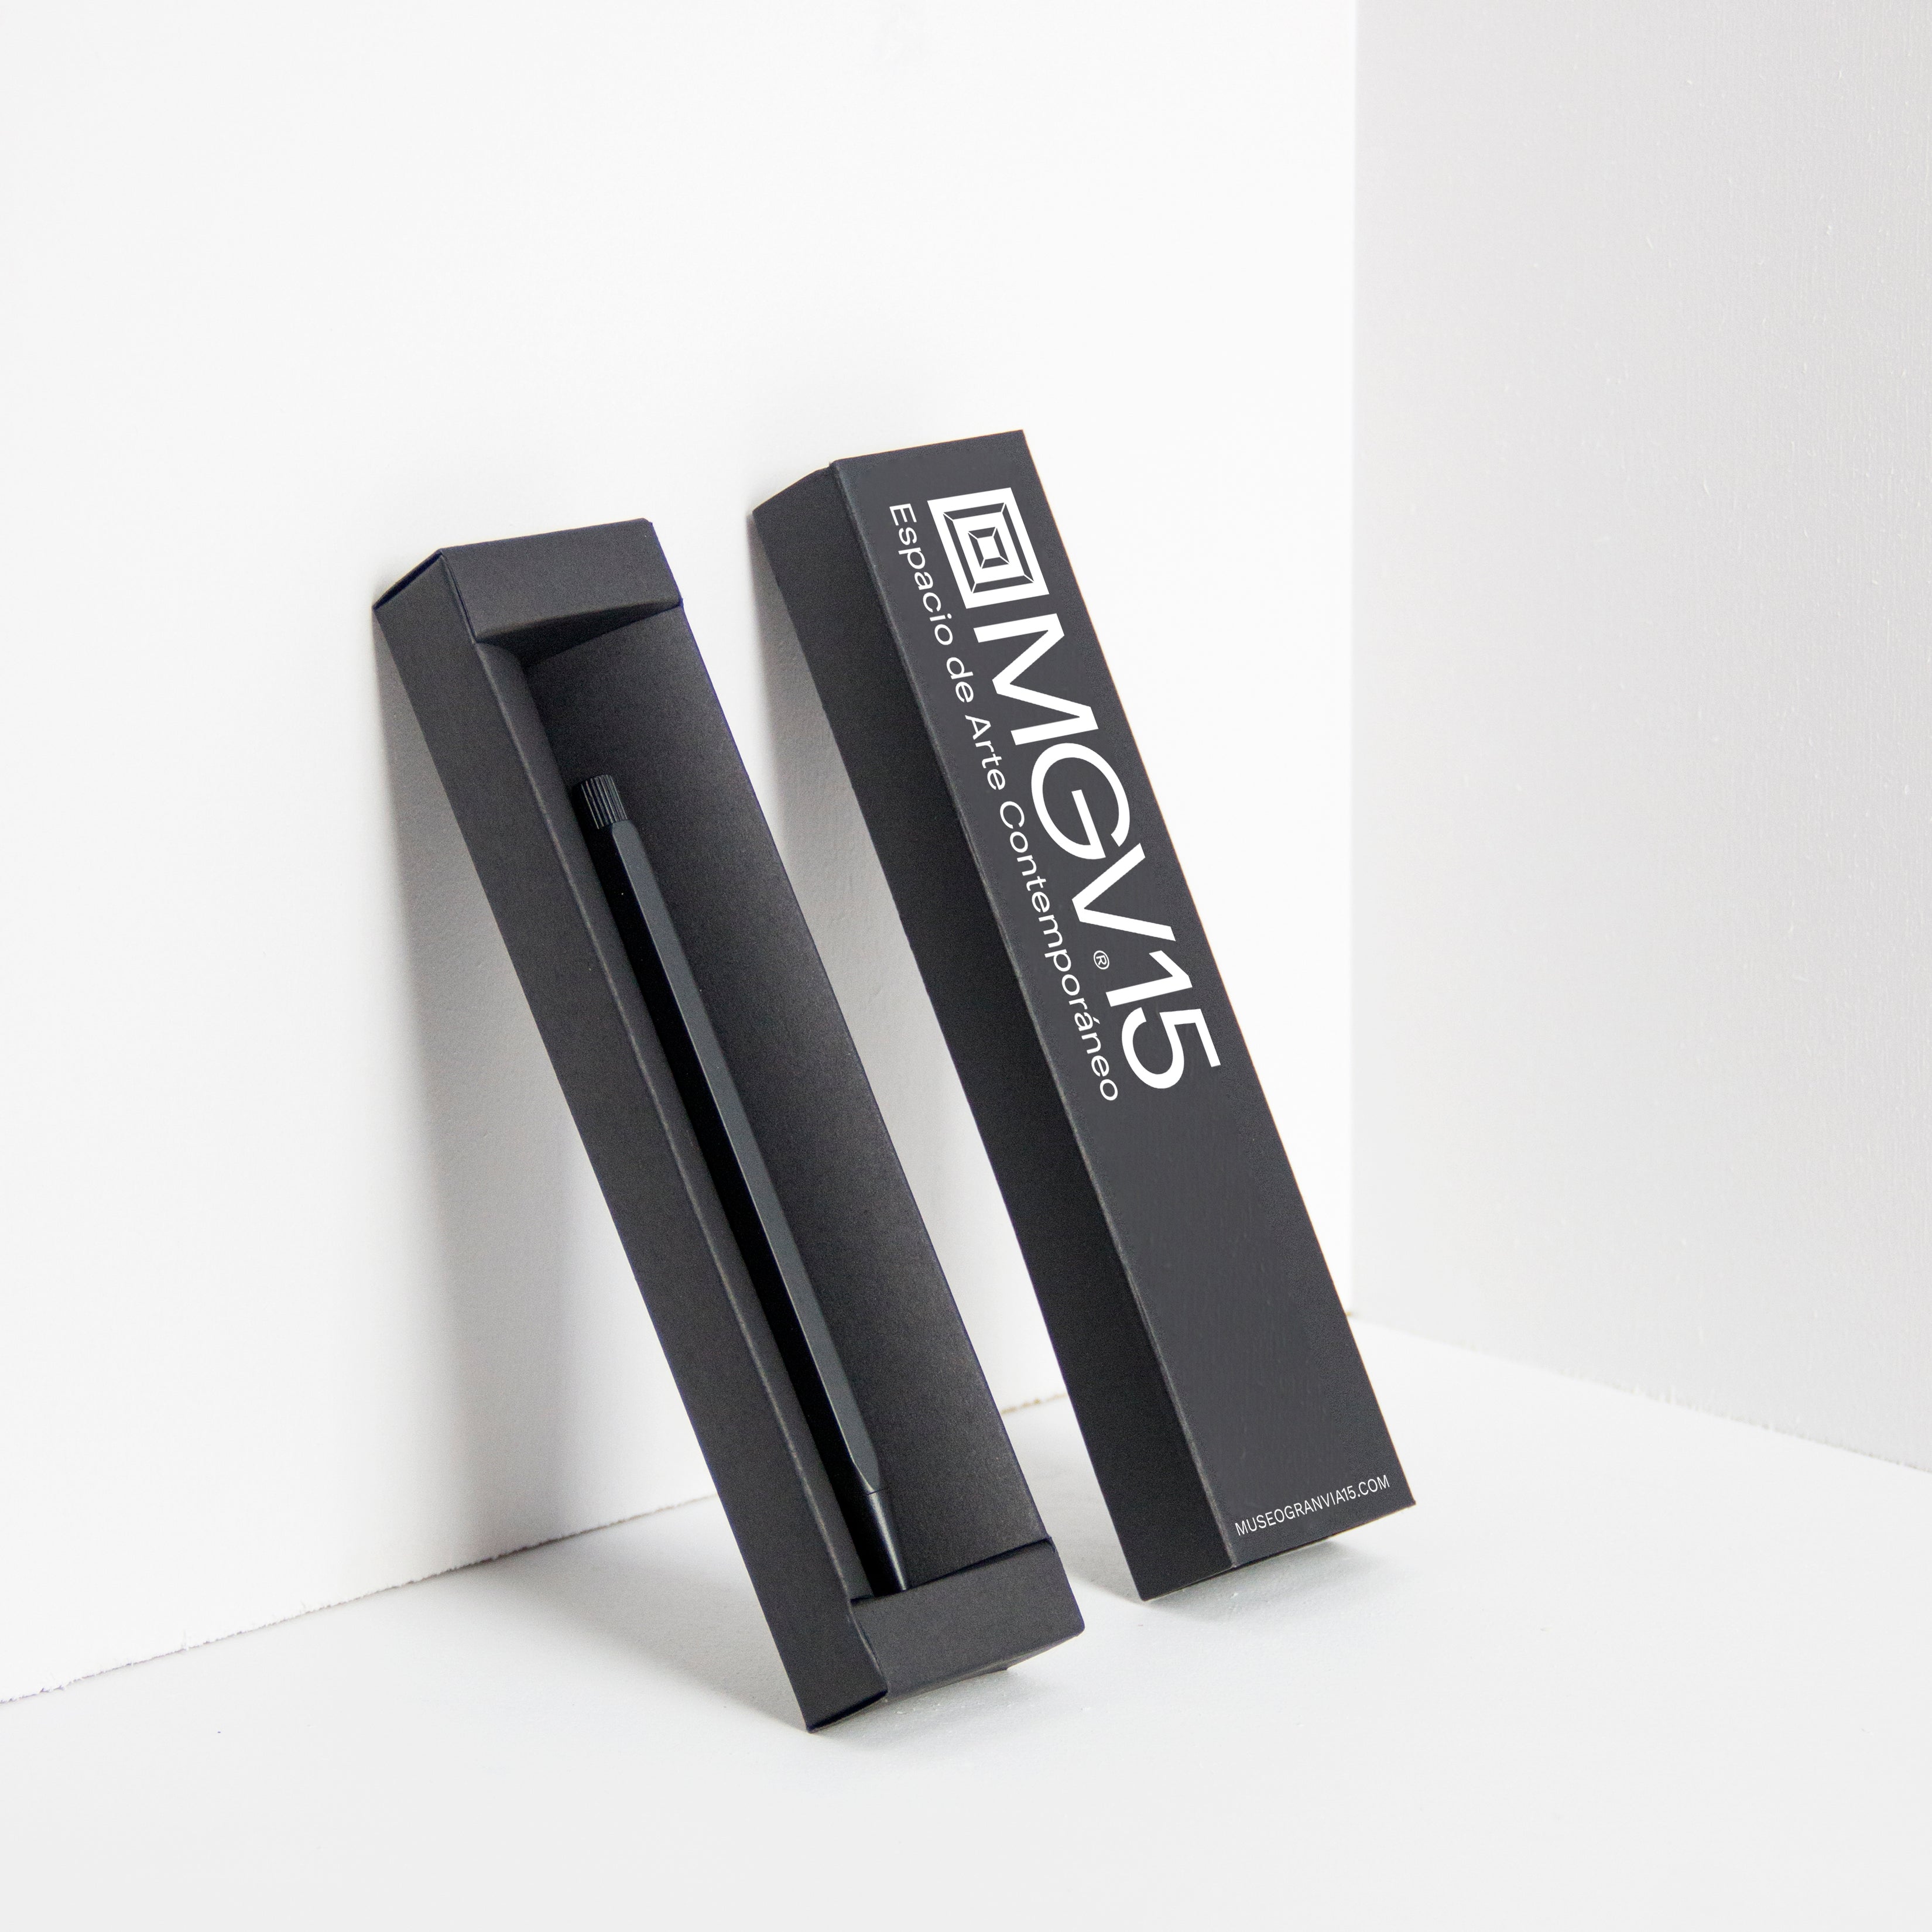 Customized black box for a pen - Octàgon Design